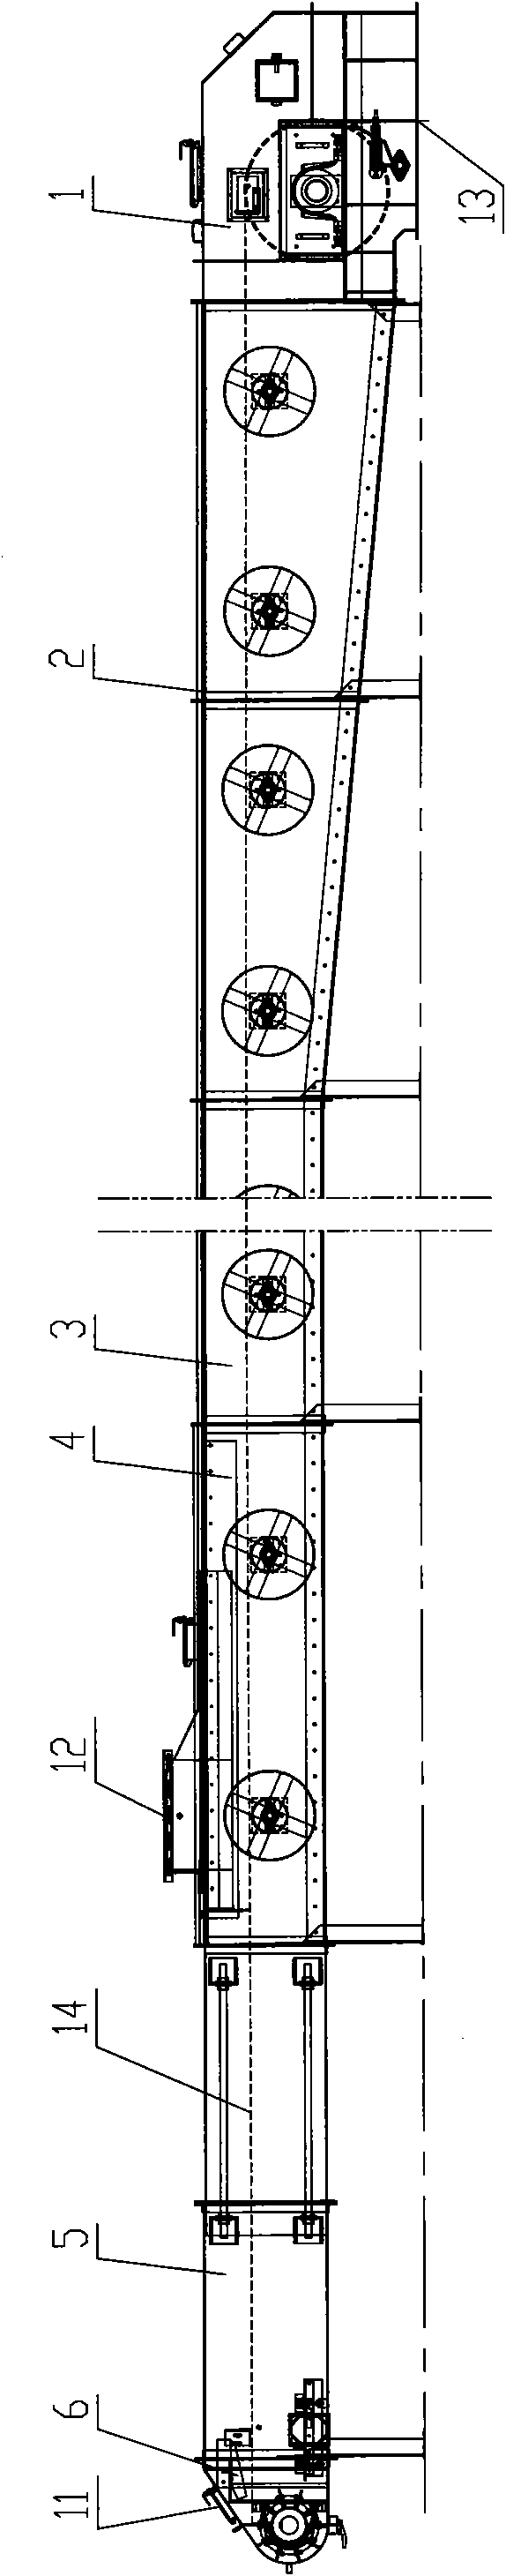 Single-carrier-roller belt type conveyer